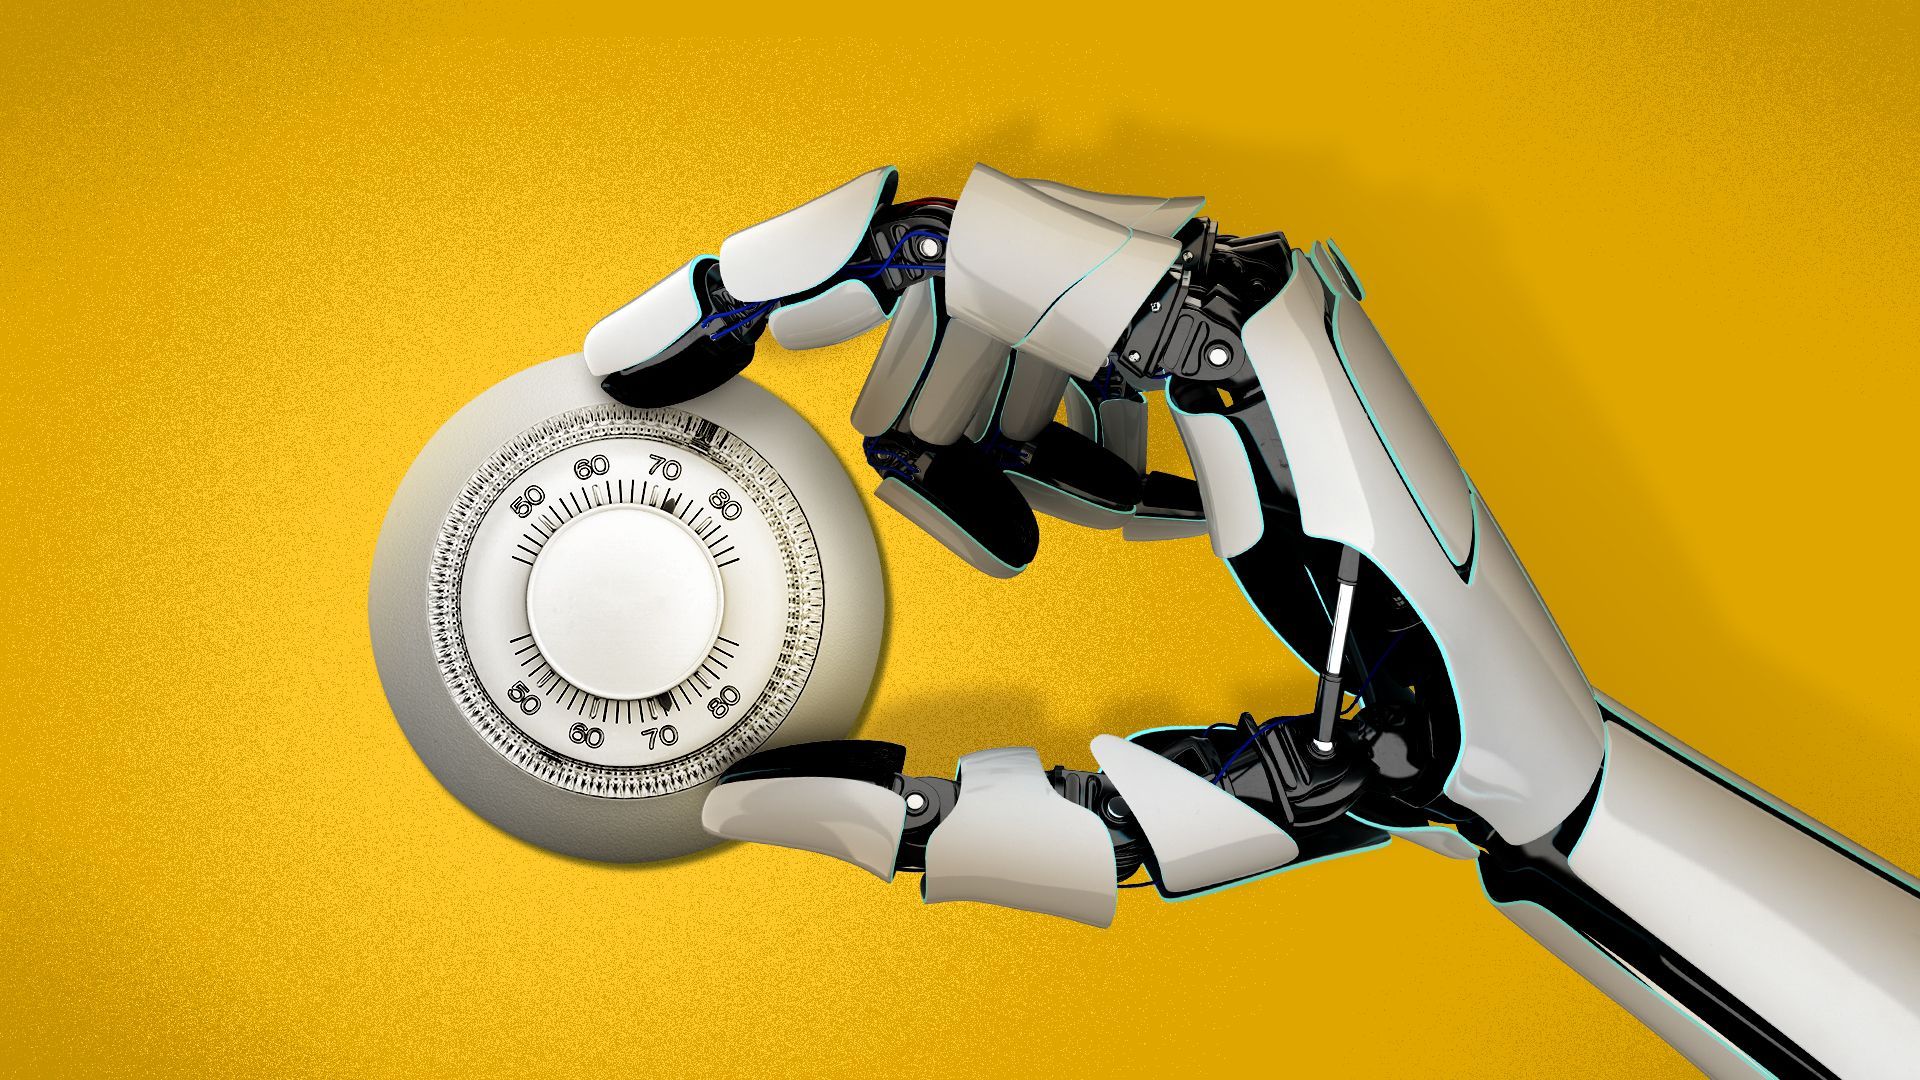 Illustration of a robot hand adjusting a thermostat.